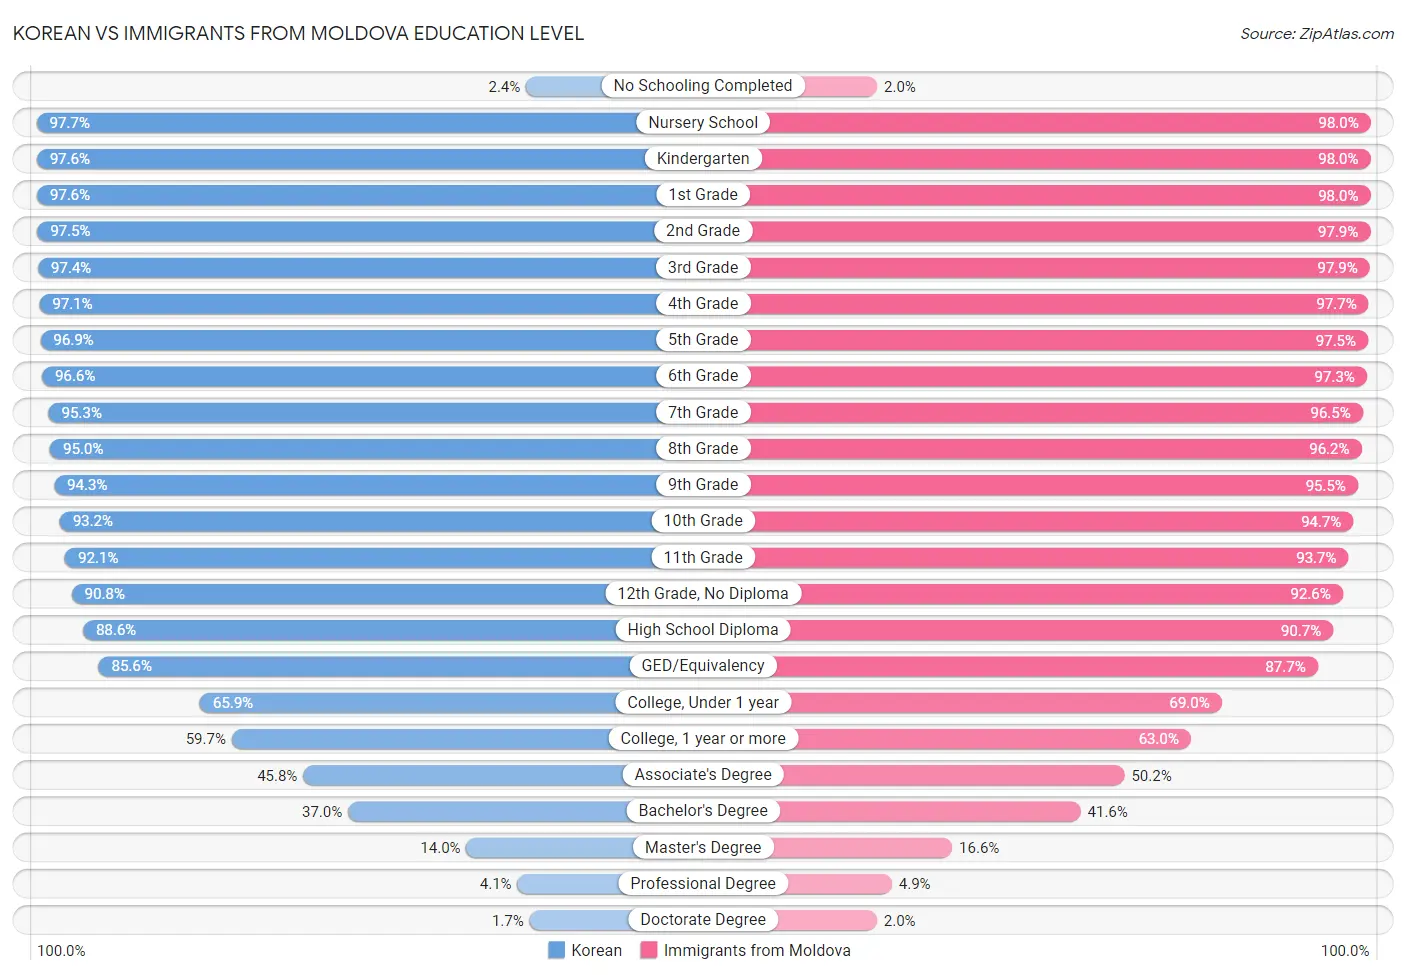 Korean vs Immigrants from Moldova Education Level